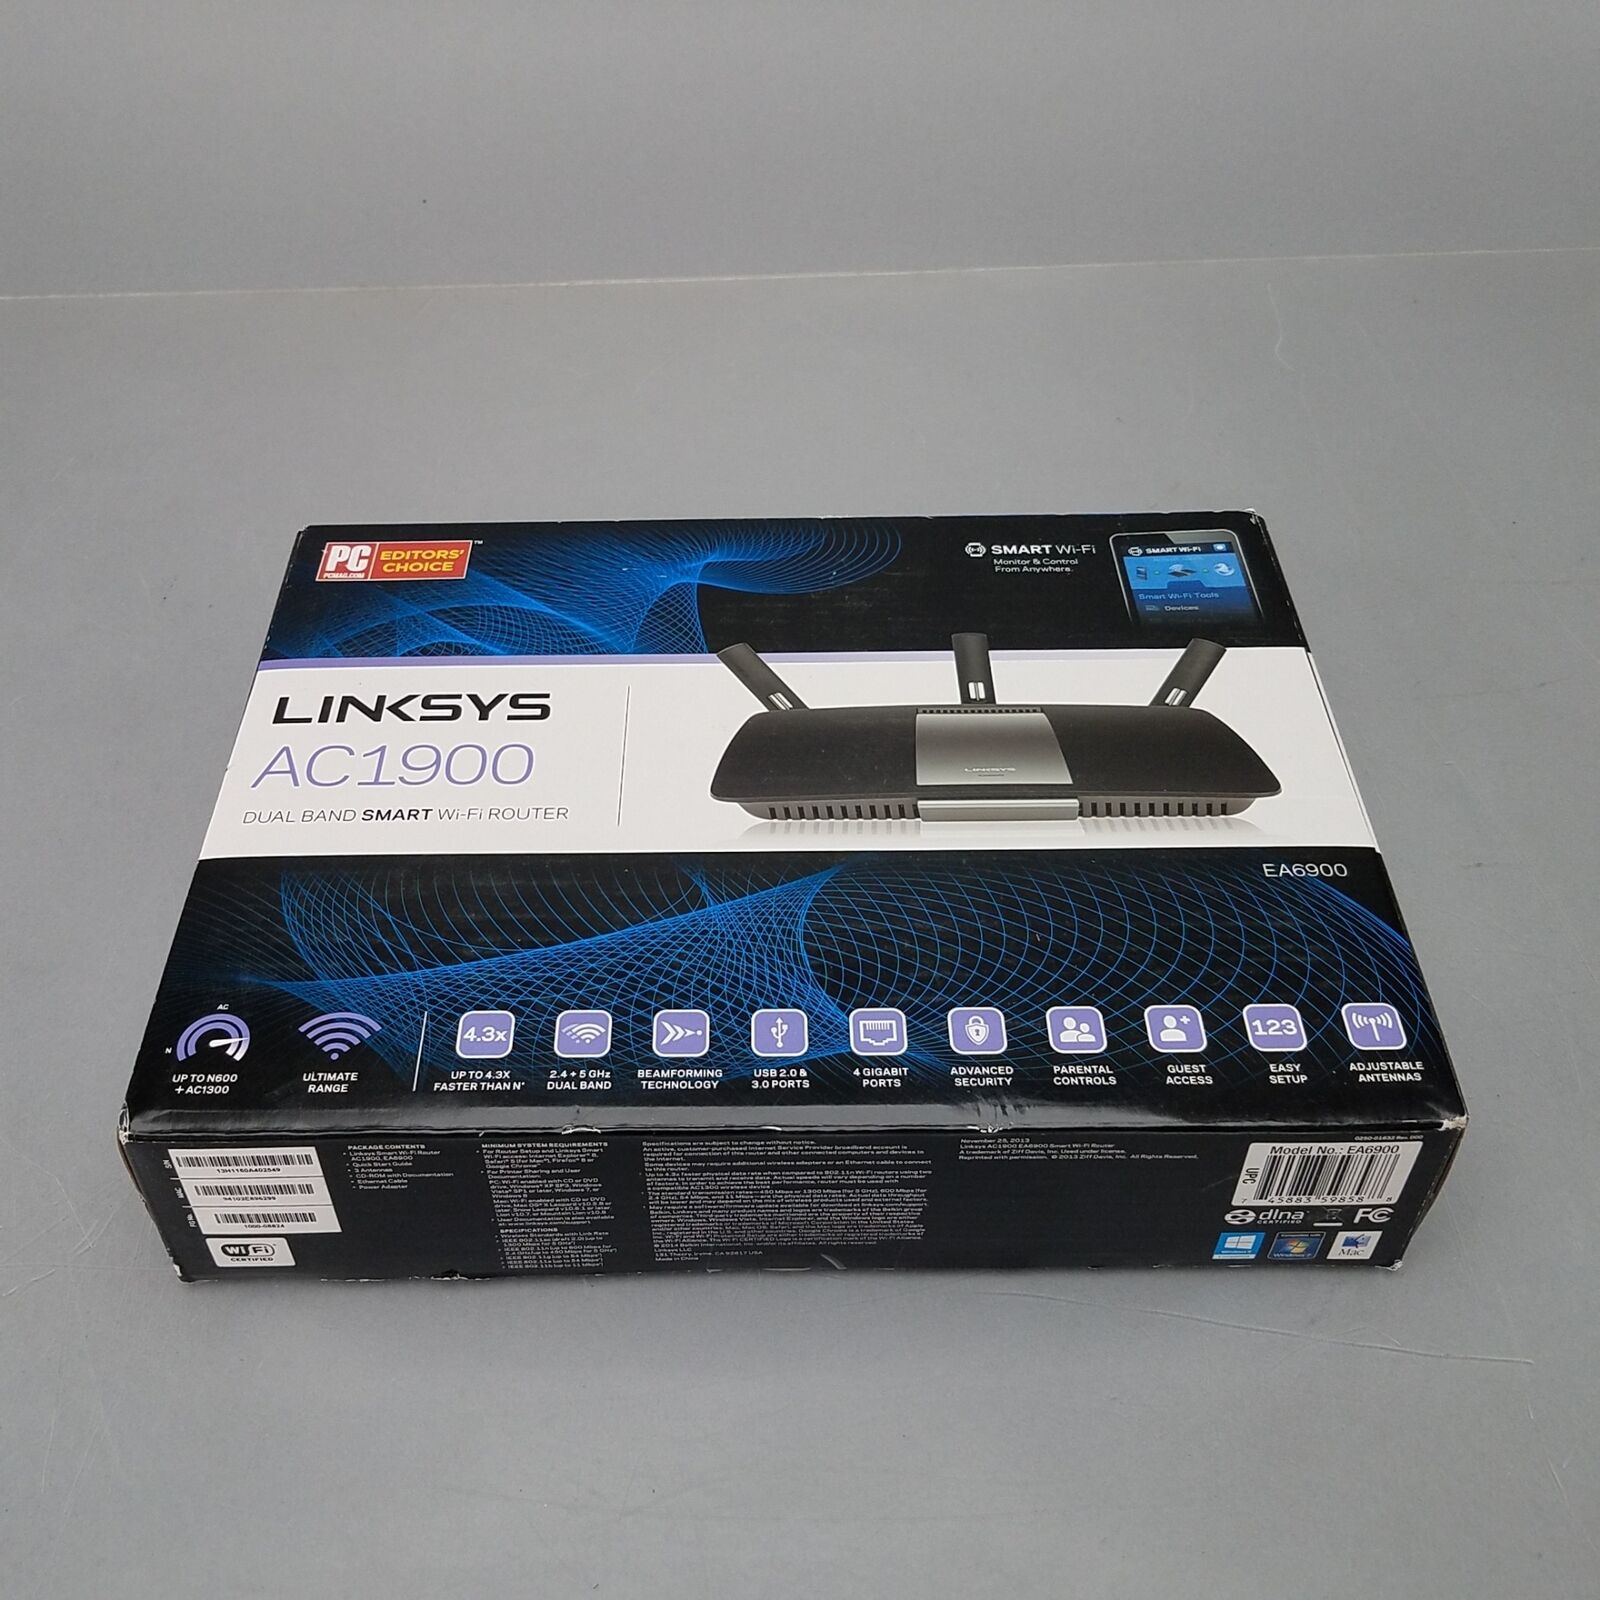 Linksys AC1900 Wireless Dual Band Smart Wi-Fi Router - Open Box